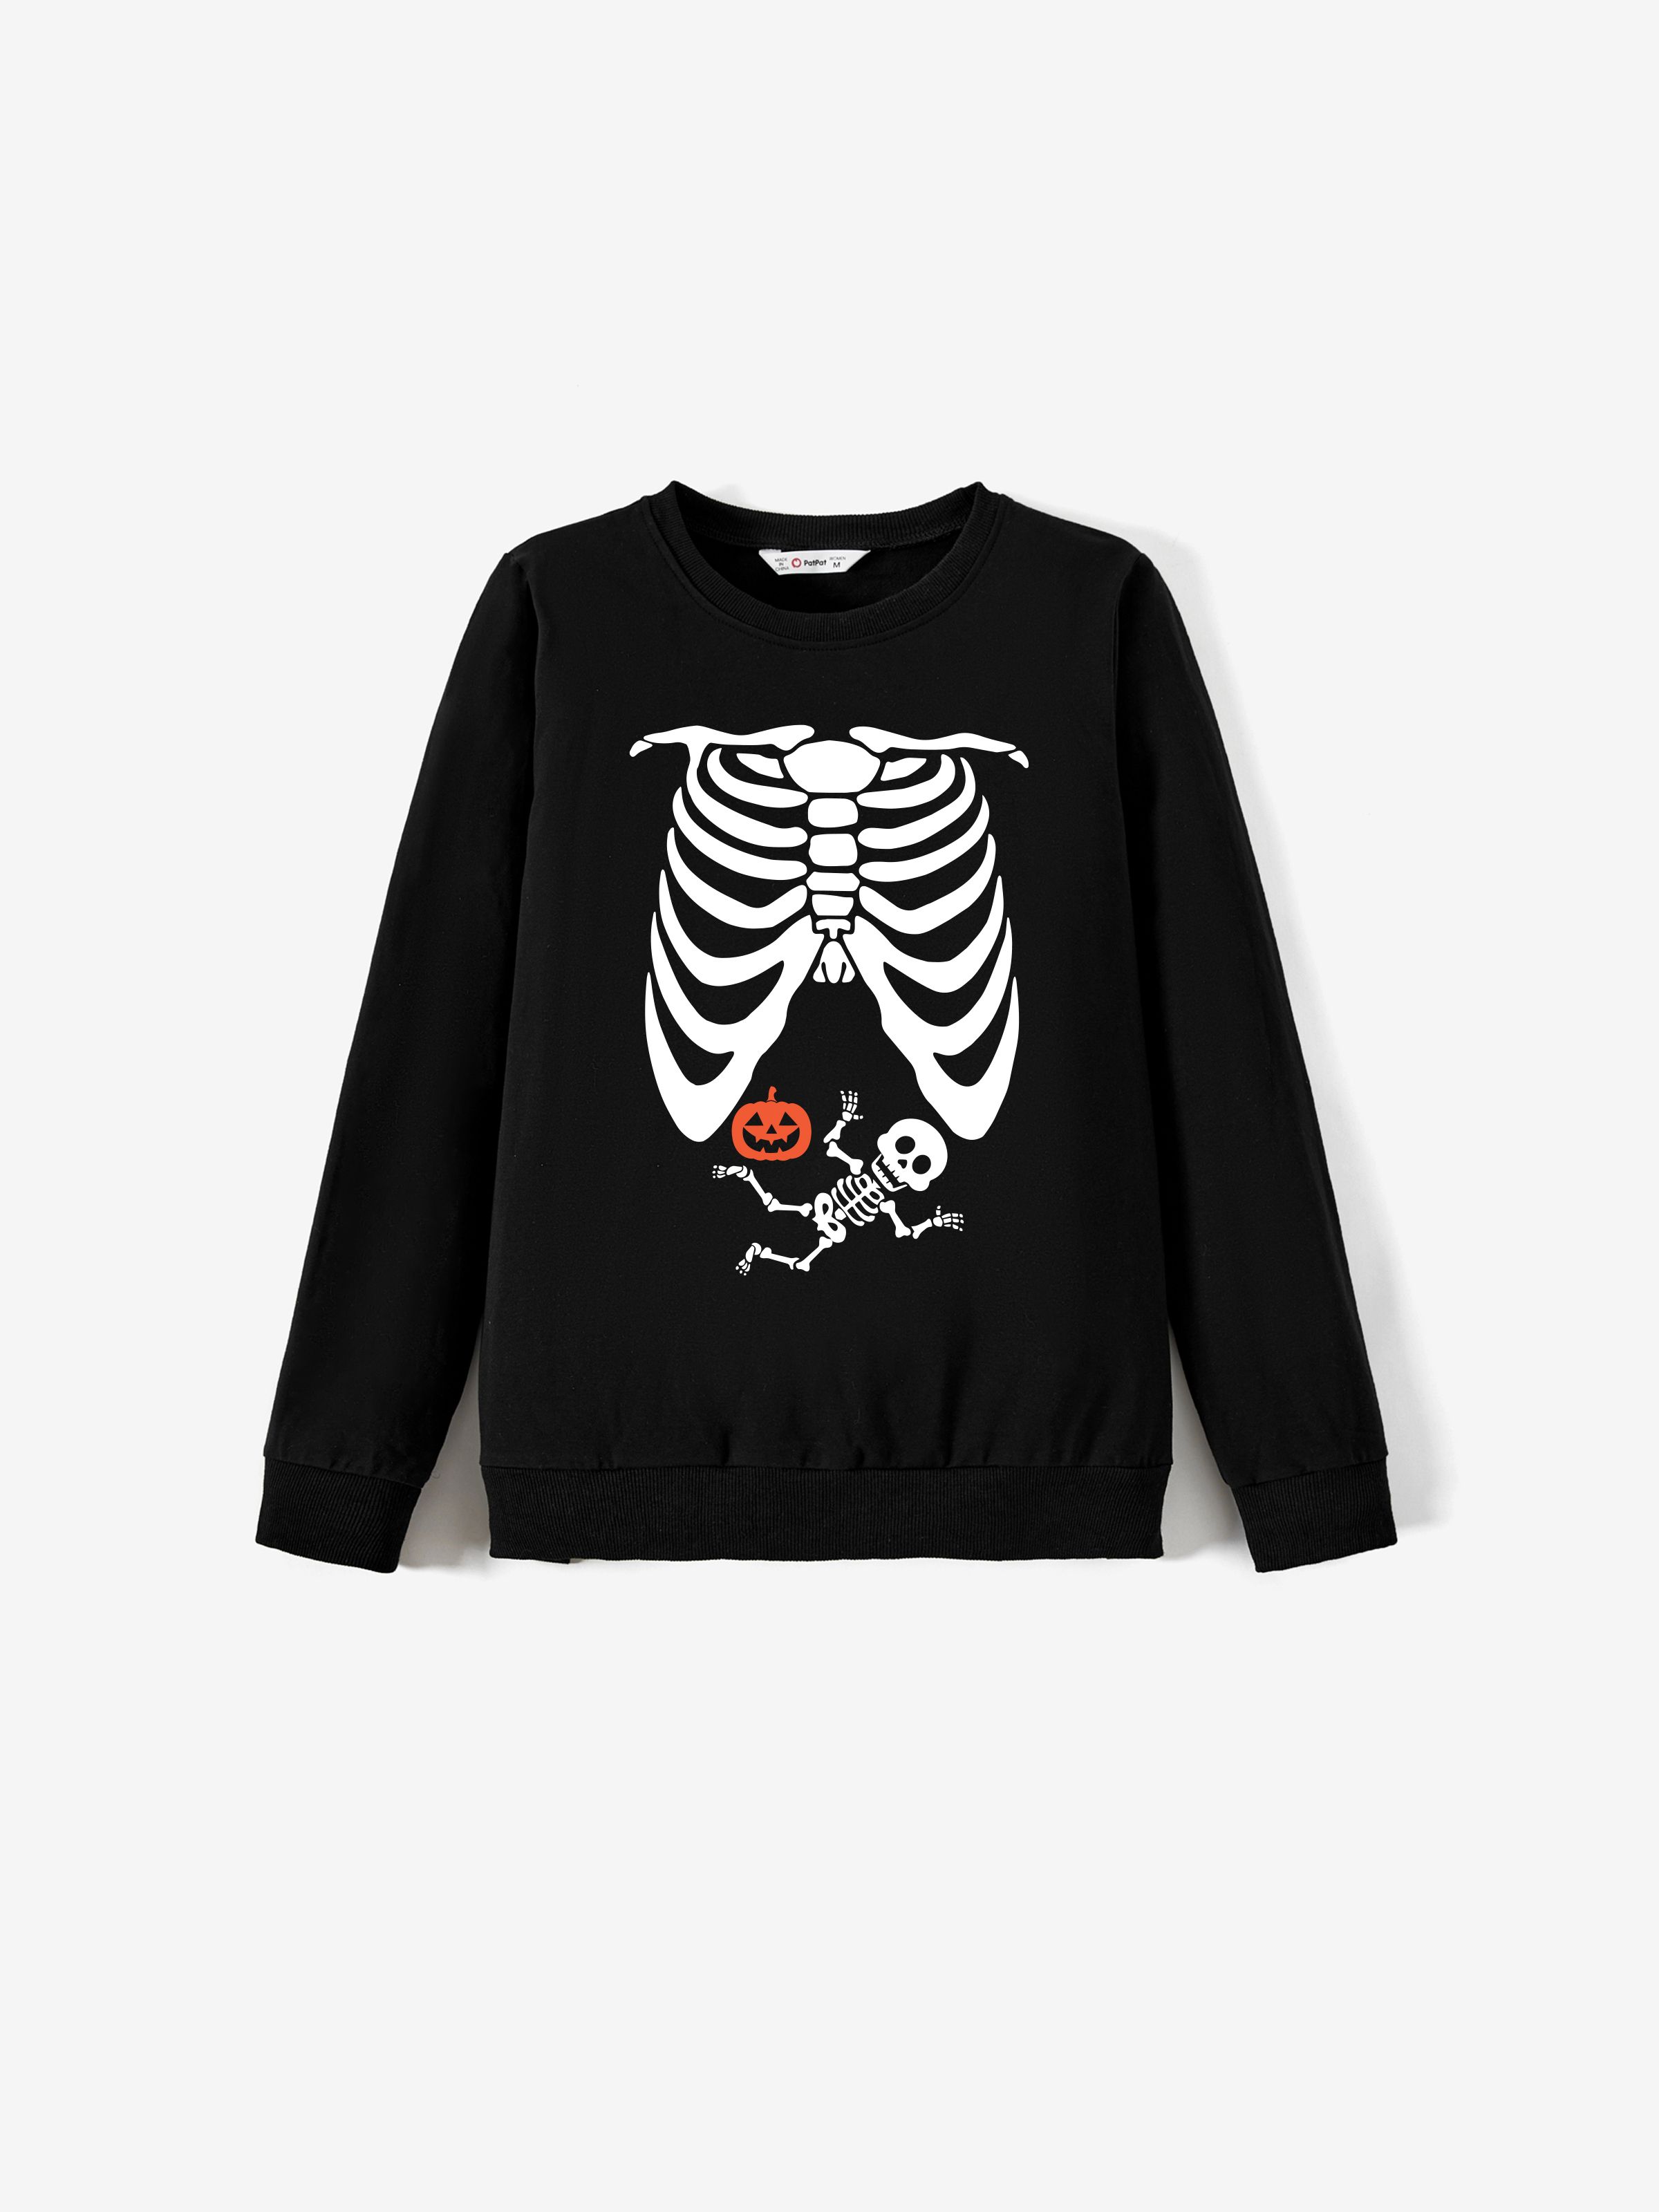 

Halloween Family Matching Tops Black Spooky Skeleton Graphic Sweatshirts